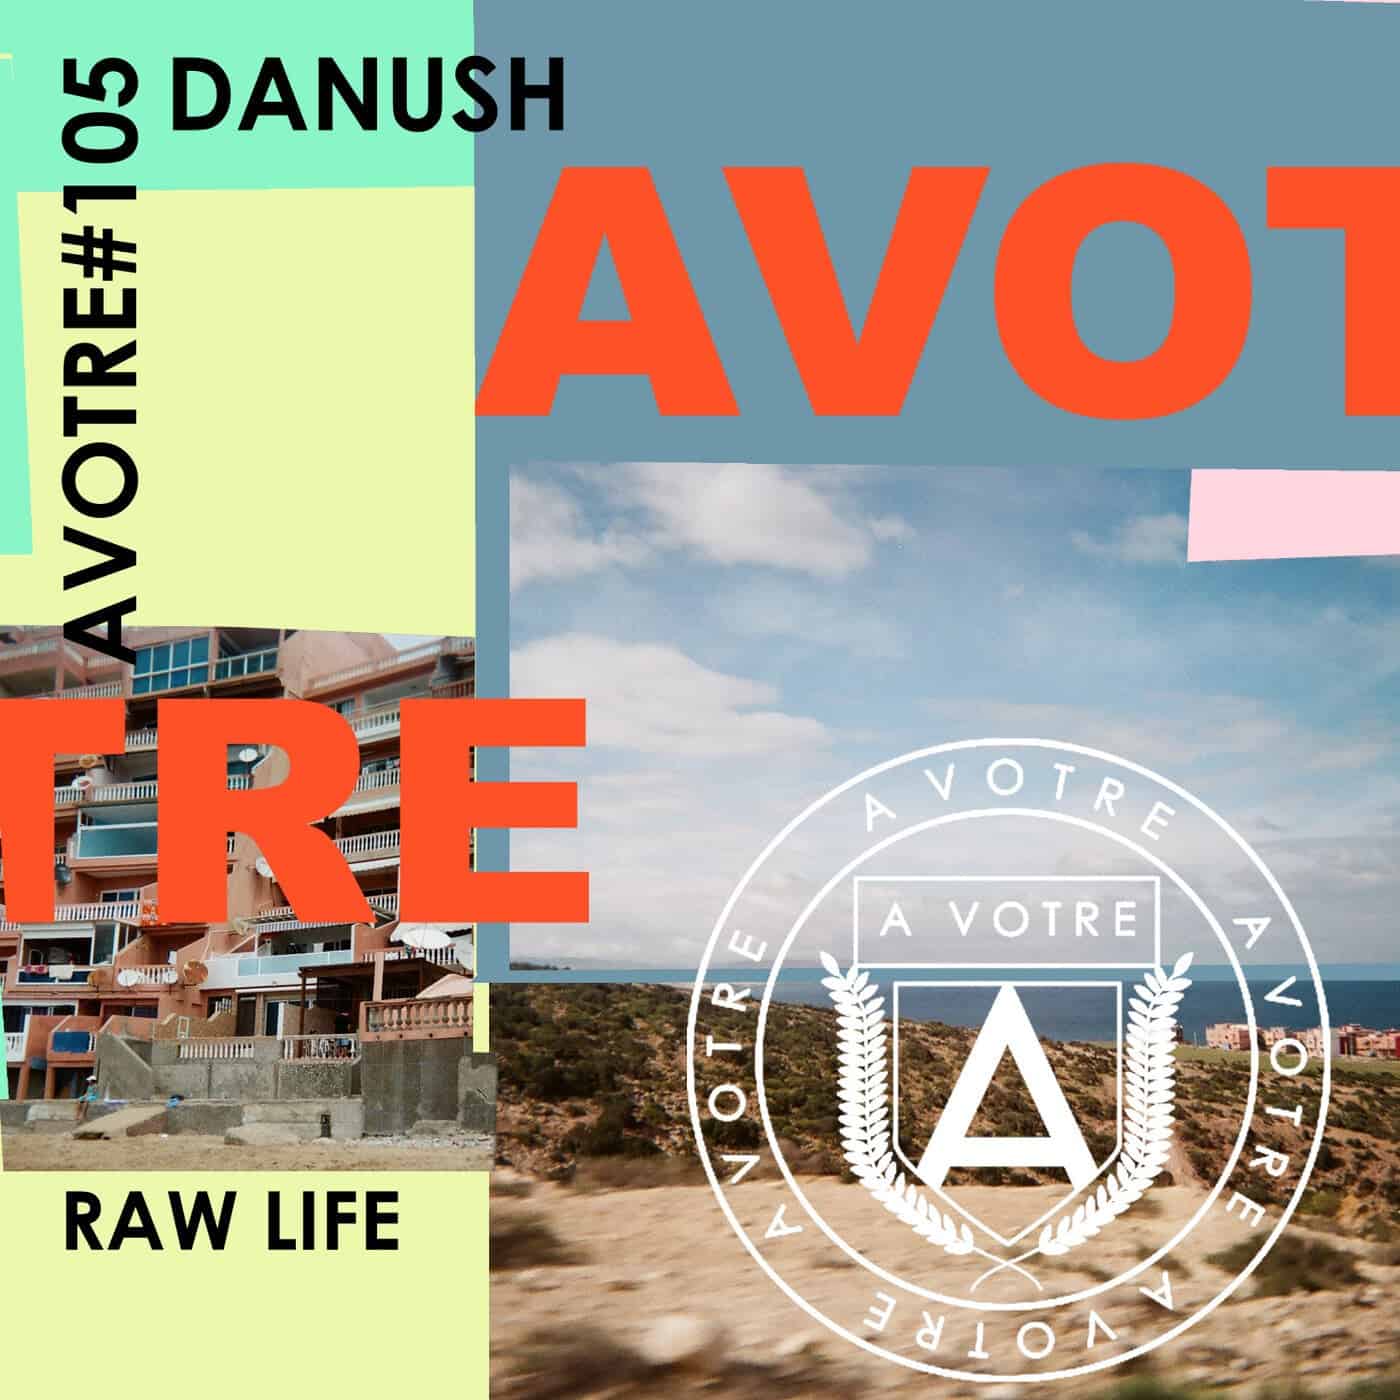 Download Danush - Raw Life on Electrobuzz